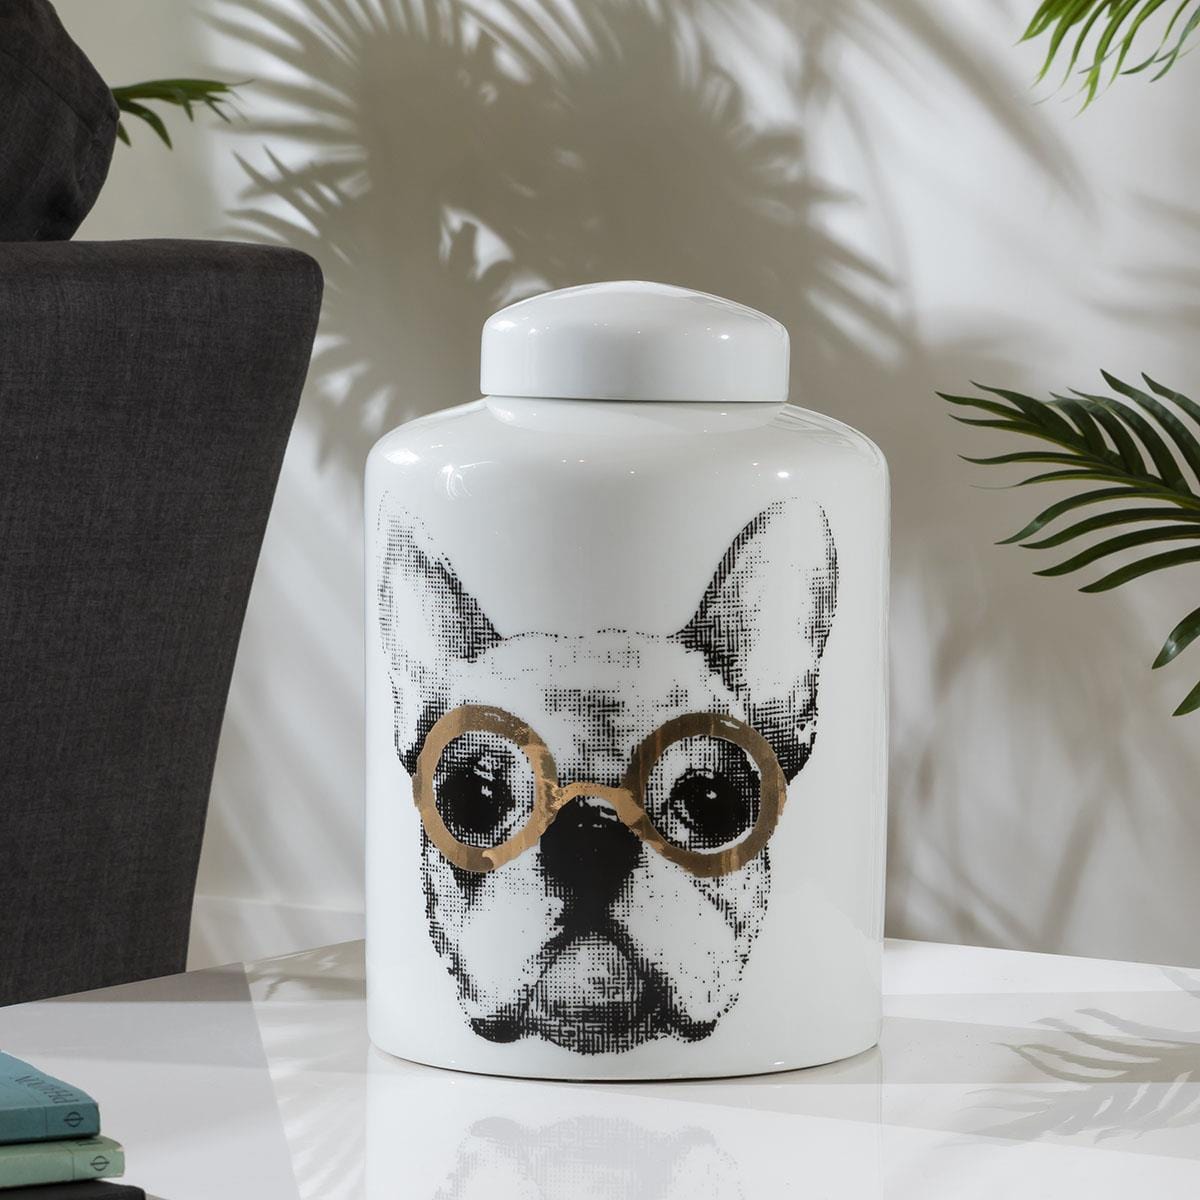 Quatropi French Bulldog Design Pot 29.5cm - Porcelain Ornament Cookie Biscuit Jar